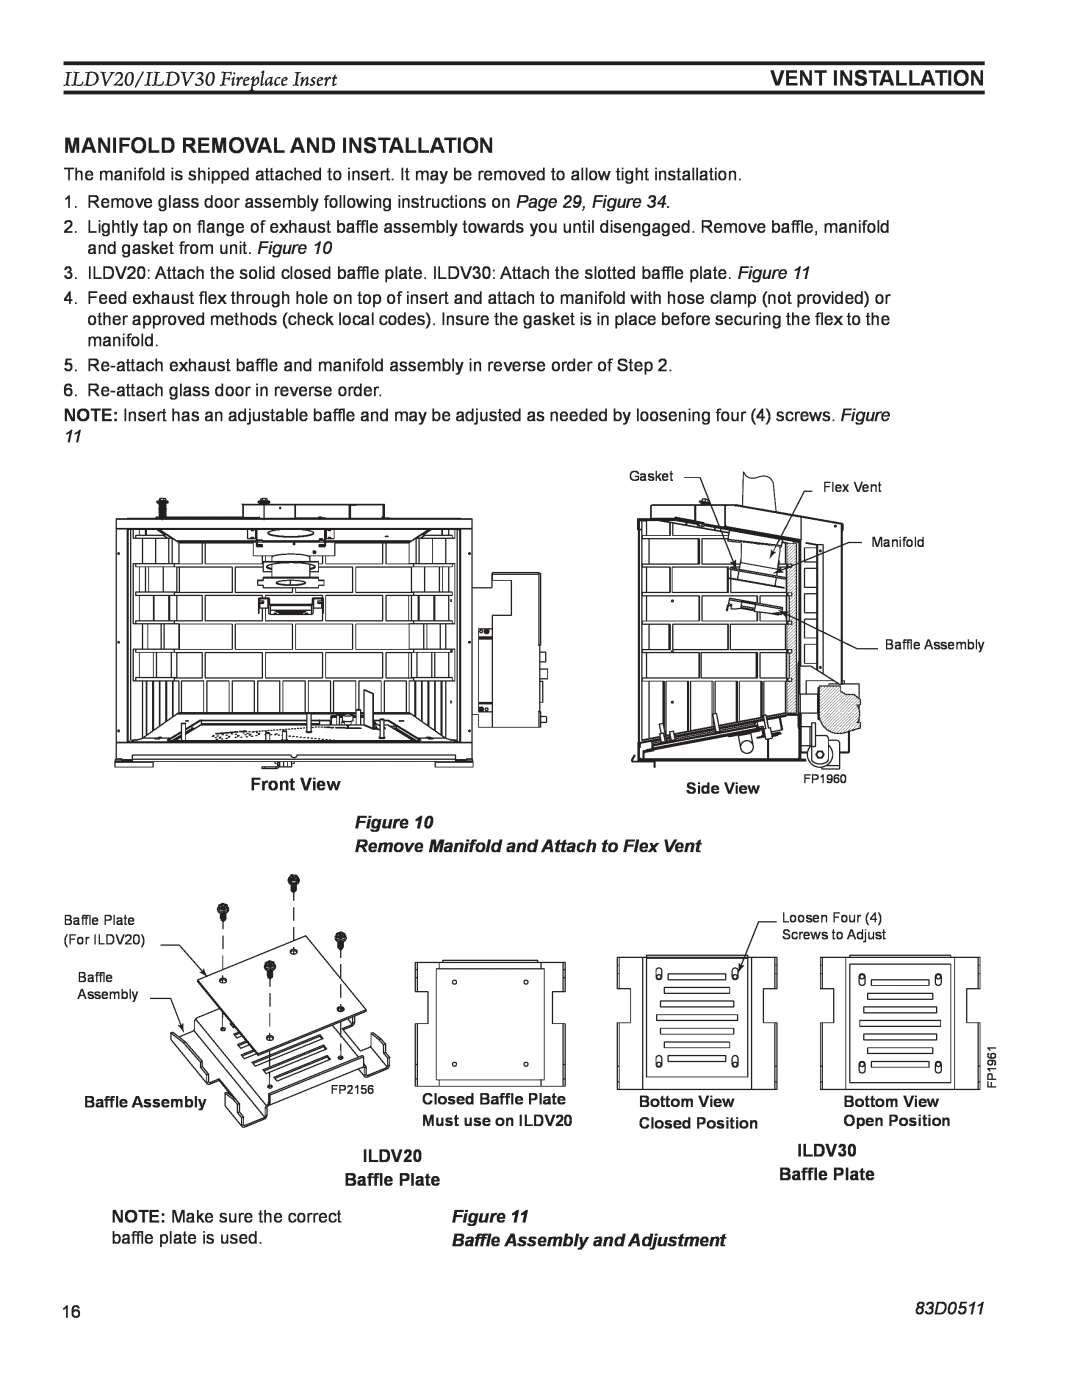 Monessen Hearth ILDV30NV Manifold Removal And Installation, ILDV20/ILDV30 Fireplace Insert, vent installation, 83D0511 